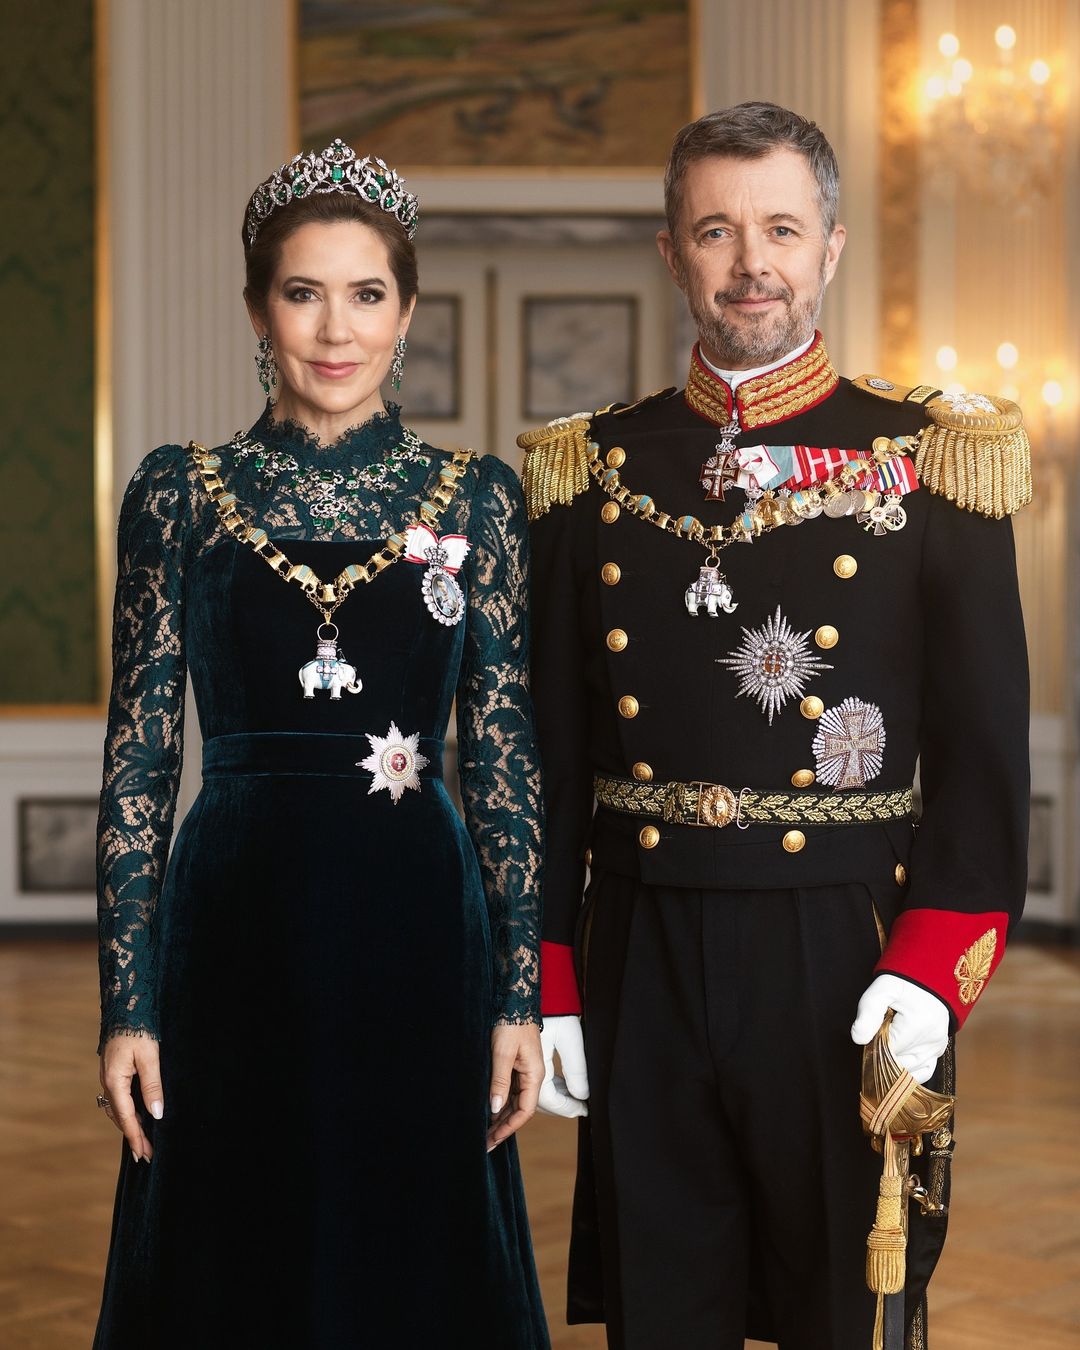 Queen Mary wears the emerald & diamond Danish crown jewels in a new portrait